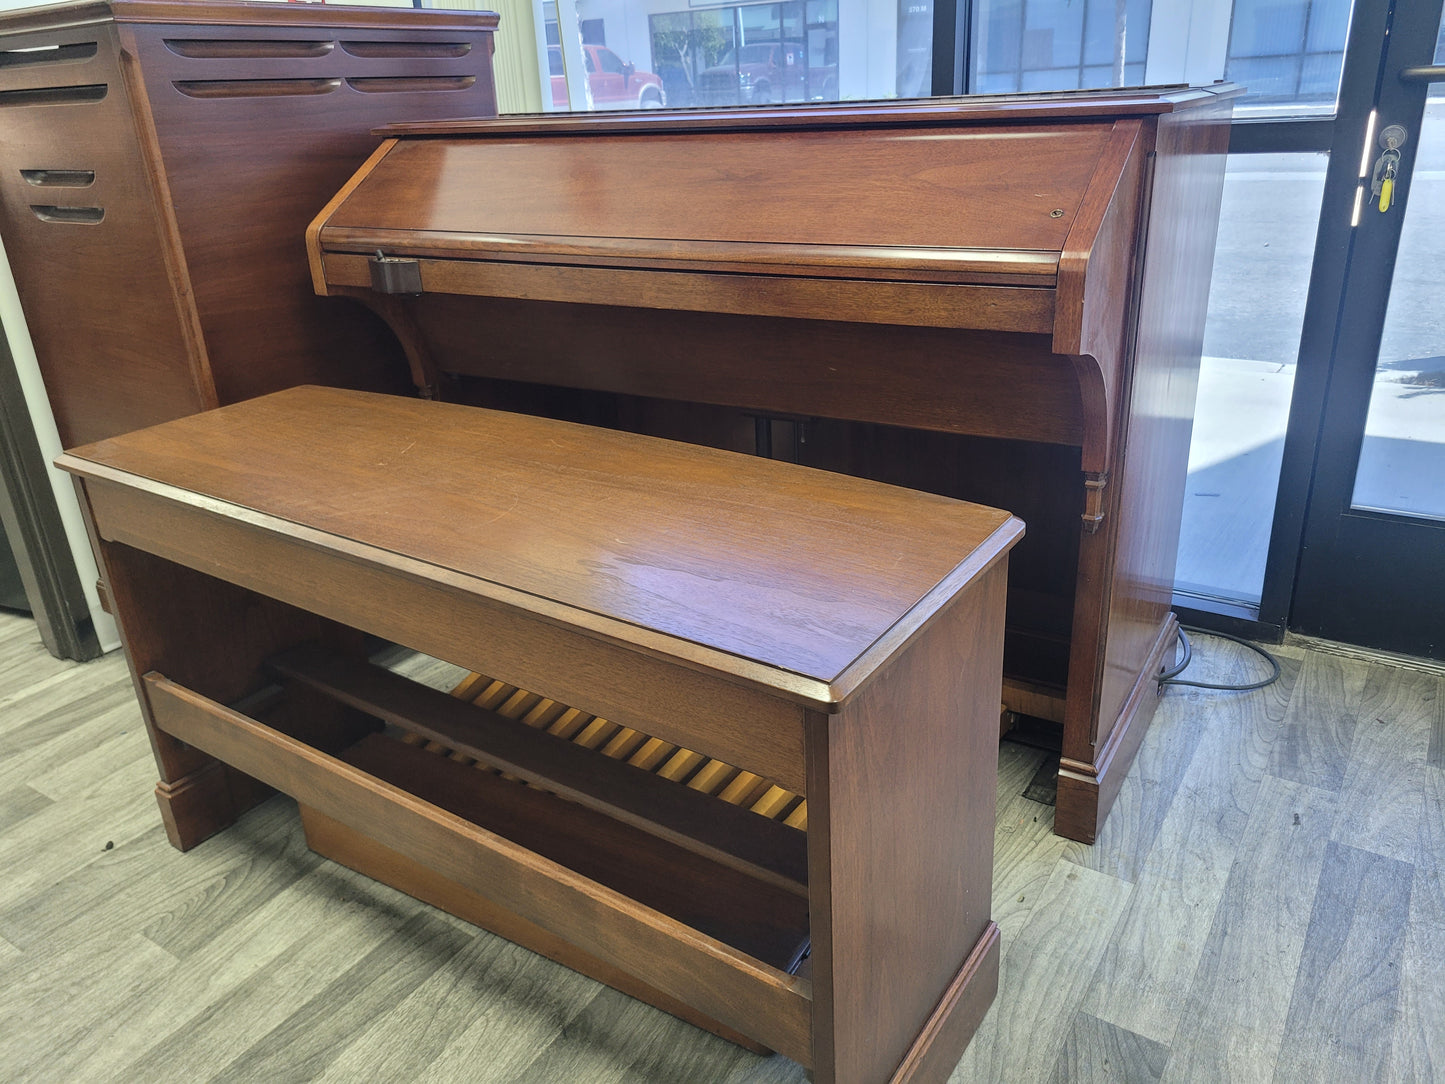 Hammond C3 organ & leslie speaker $8995.00